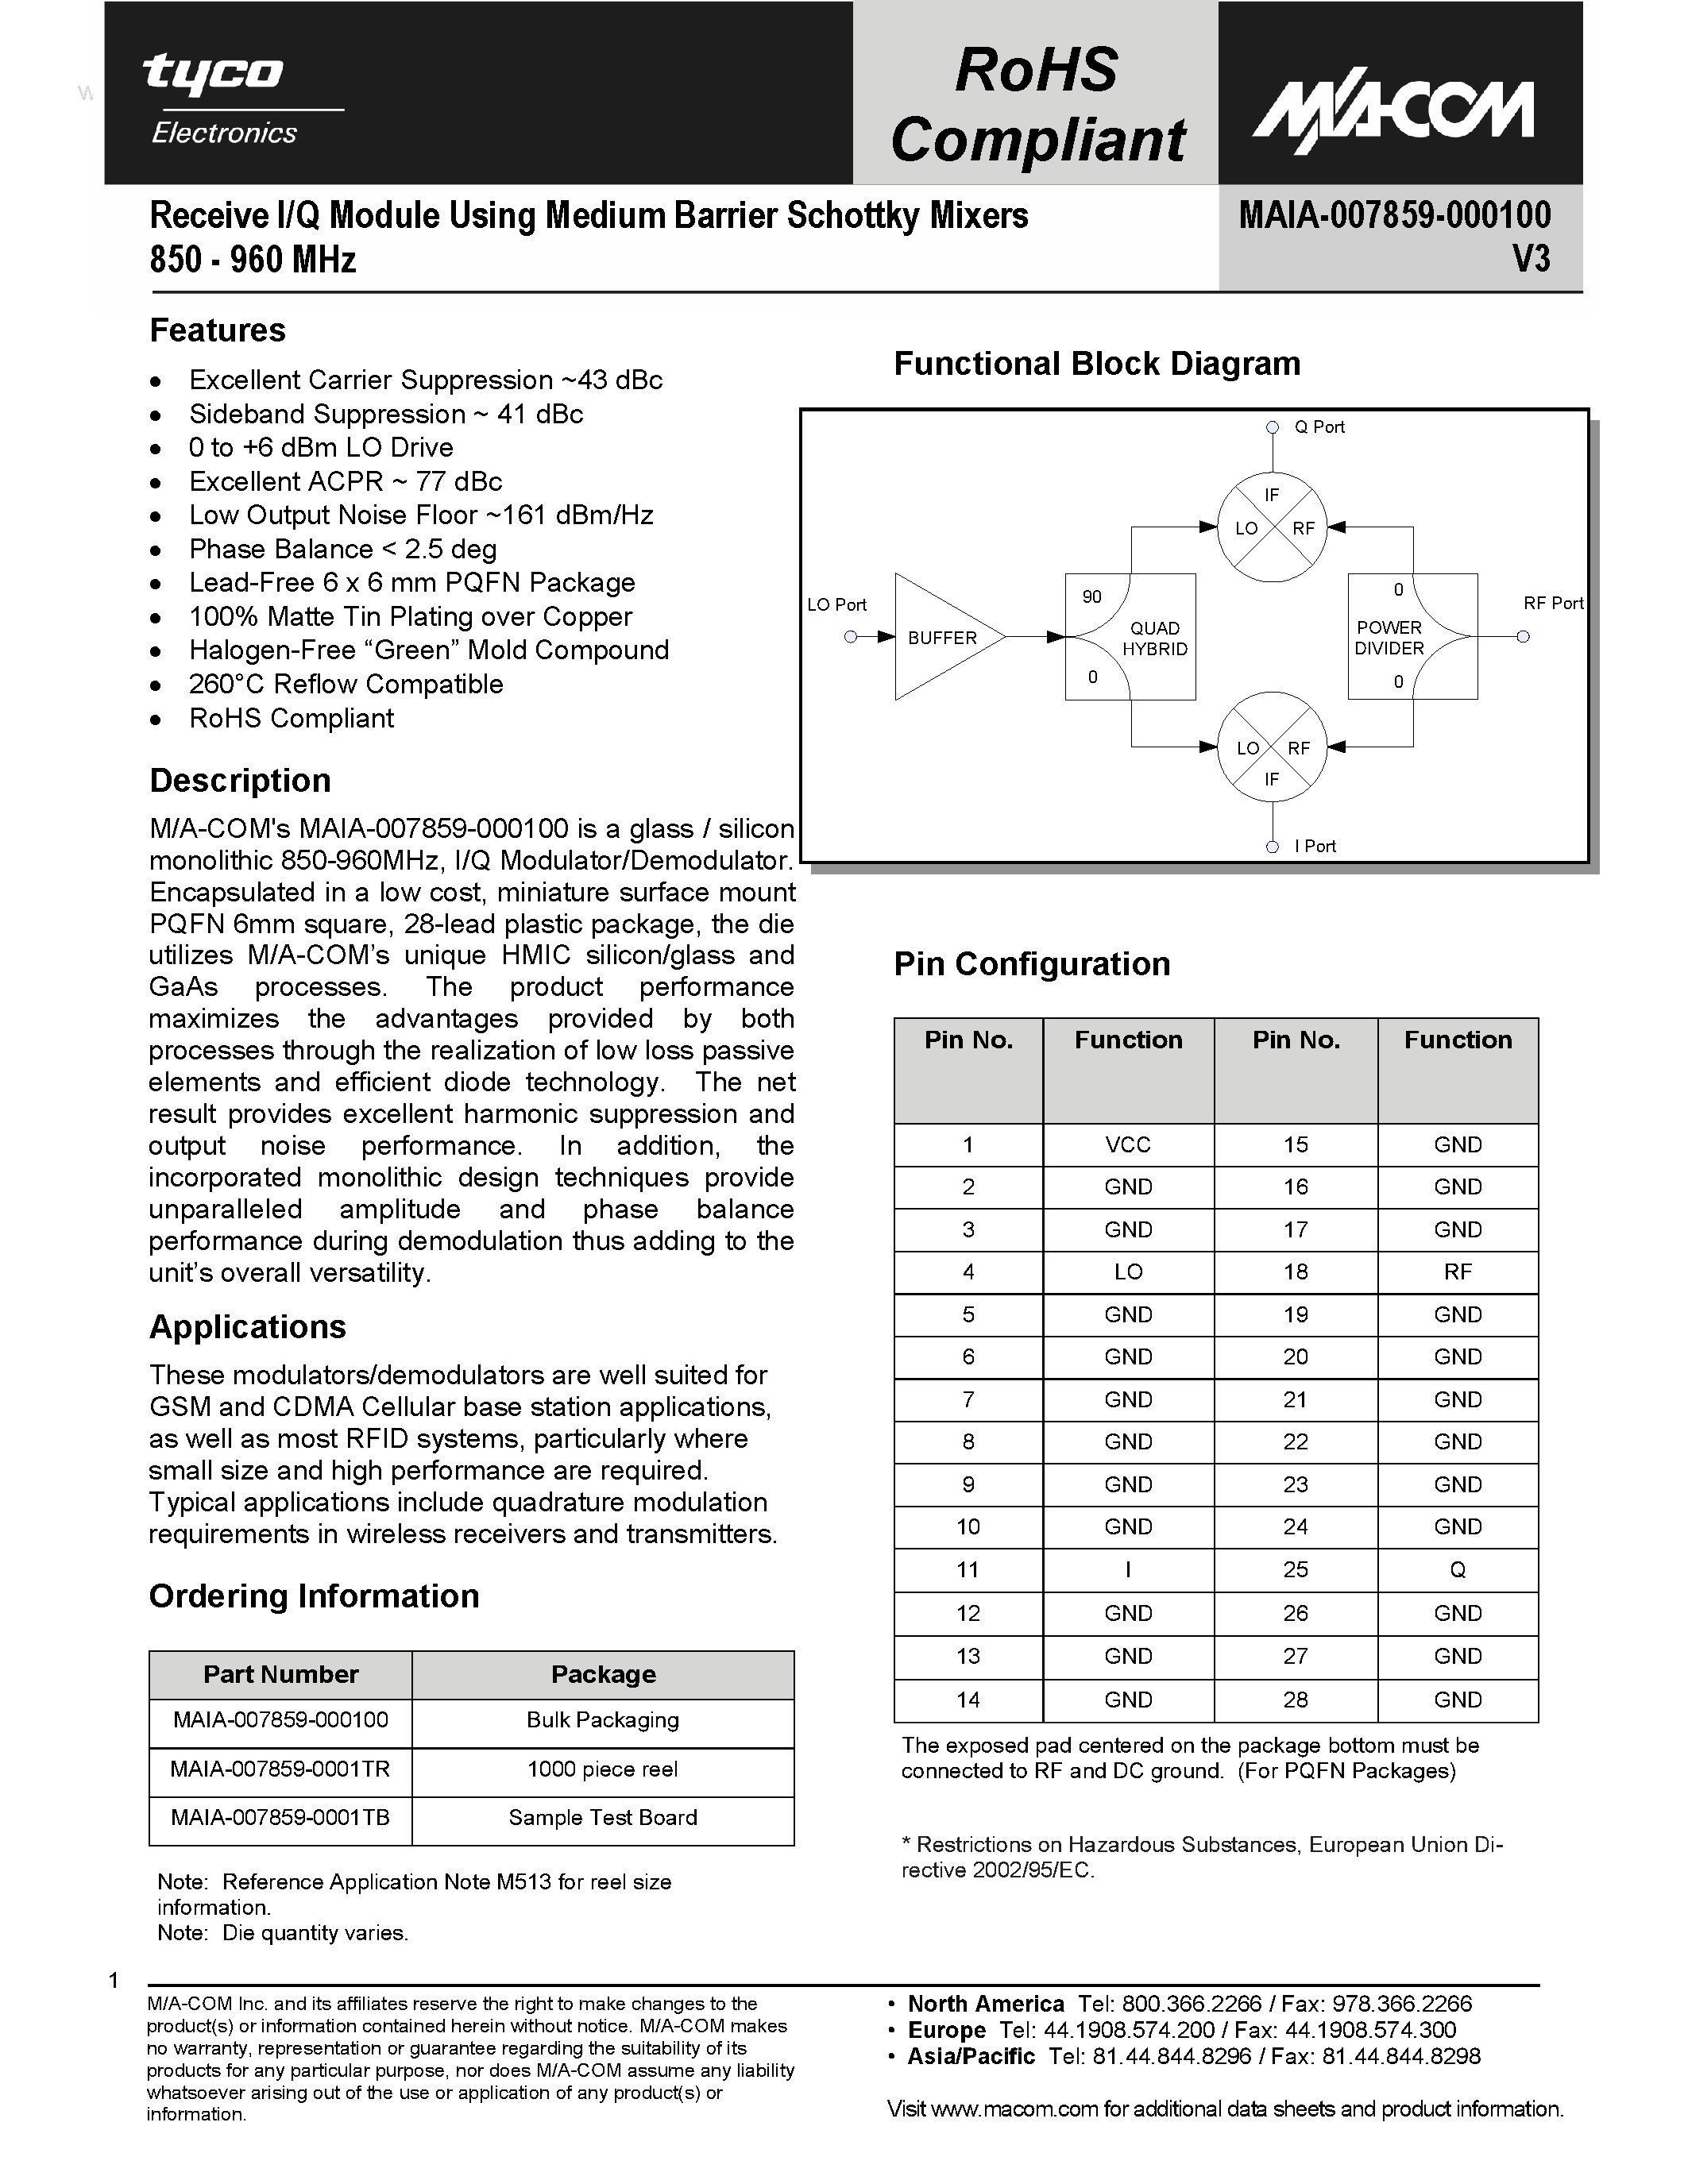 Datasheet MAIA-007859-000100 - Receive I/Q Module Using High Barrier Schottky Mixers page 1